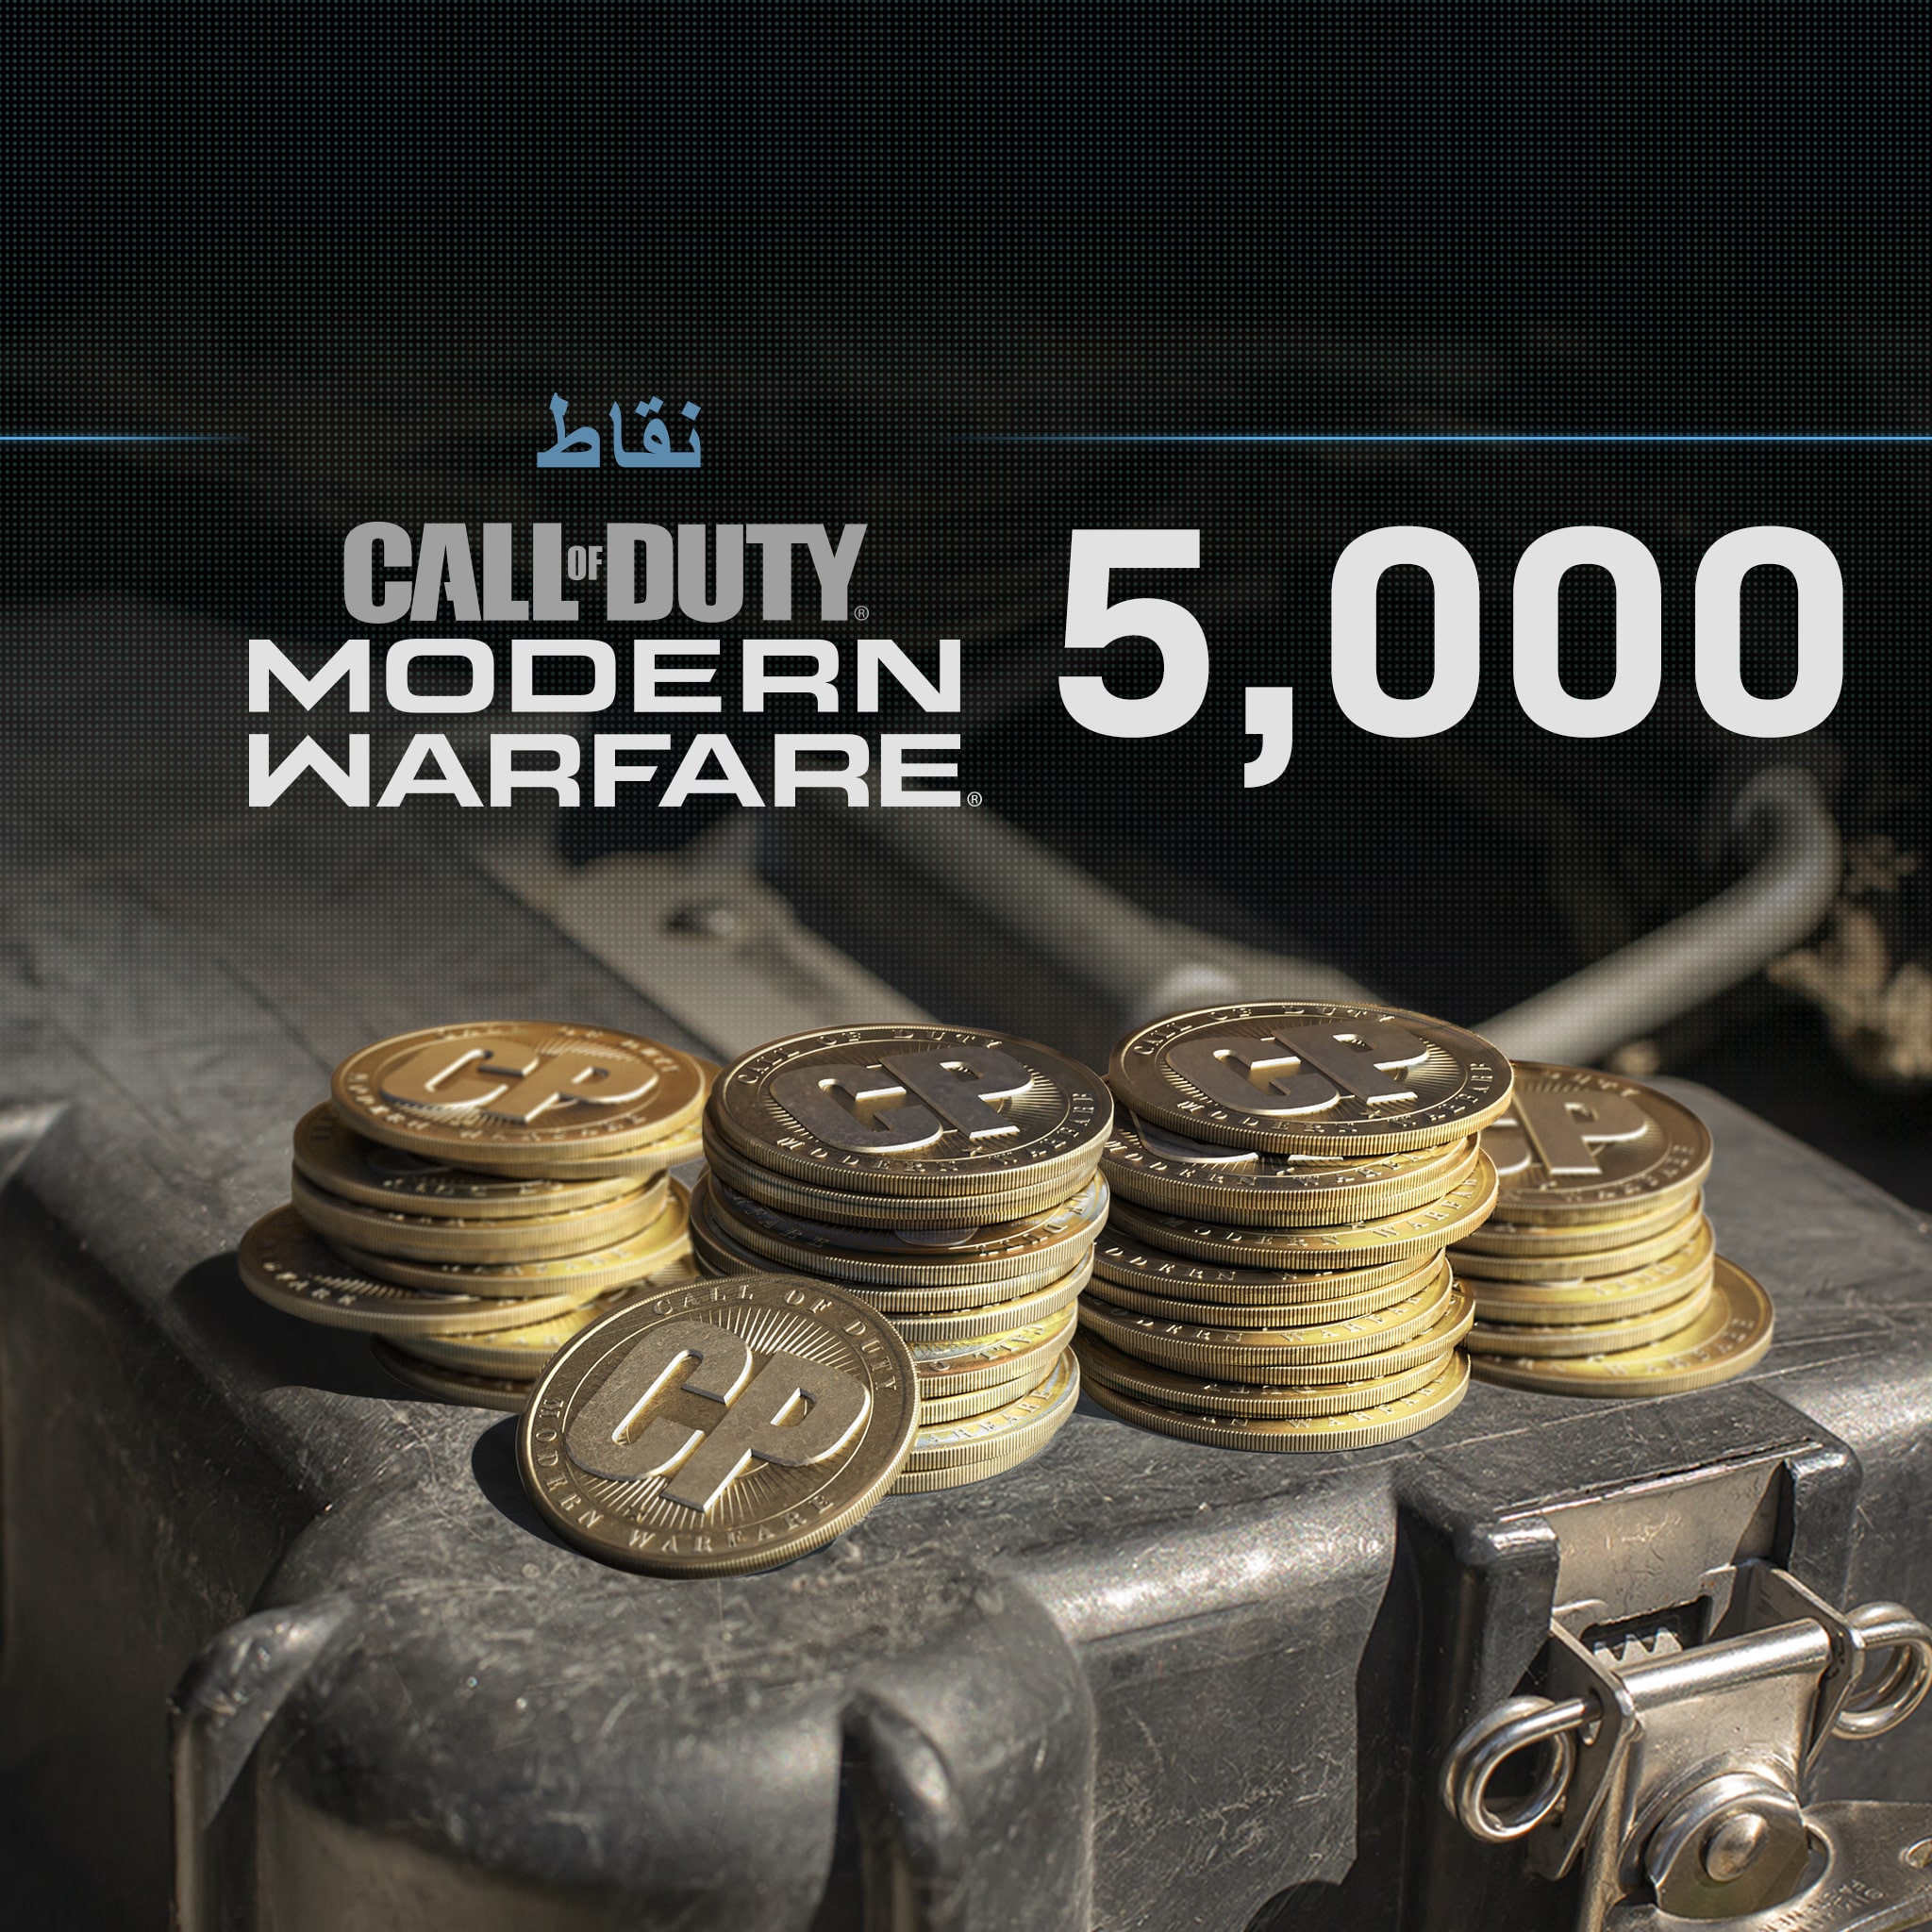 5,000 من نقاط Call of Duty®: Modern Warfare®